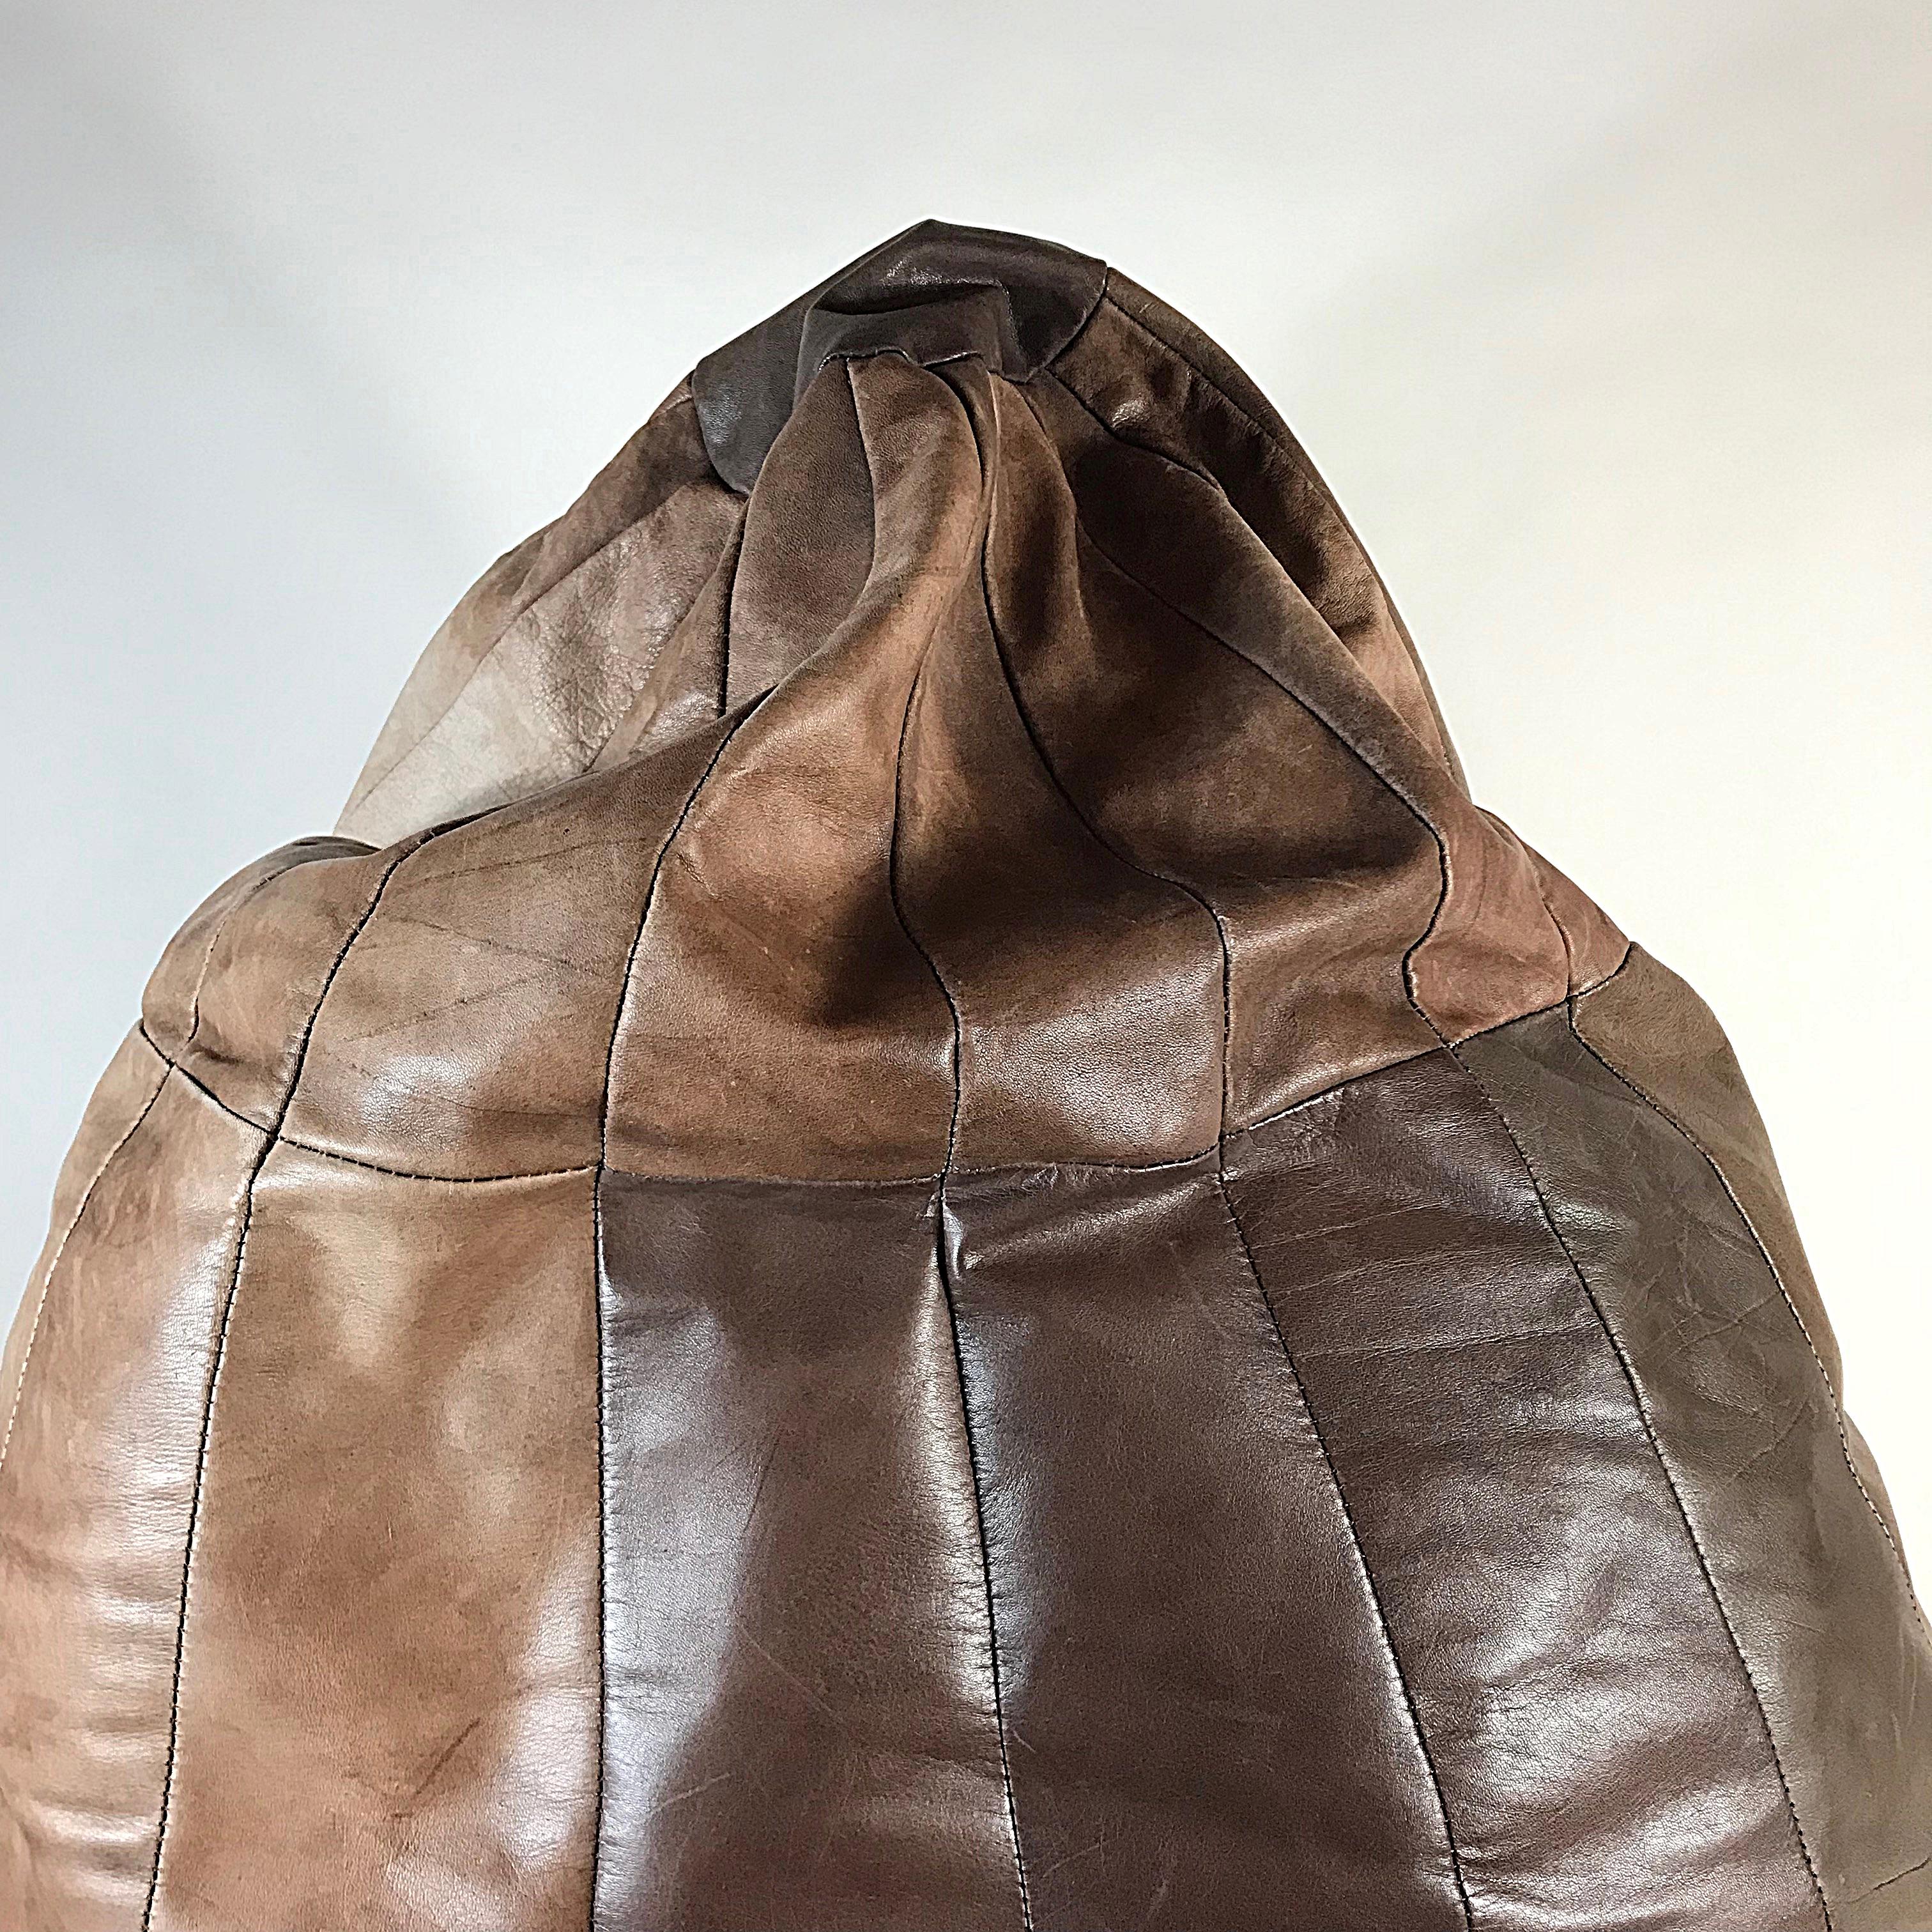 Mid-Century Modern Midcentury Modern De Sede Brown Leather Patchwork Bean Bag, 1970s, Switzerland